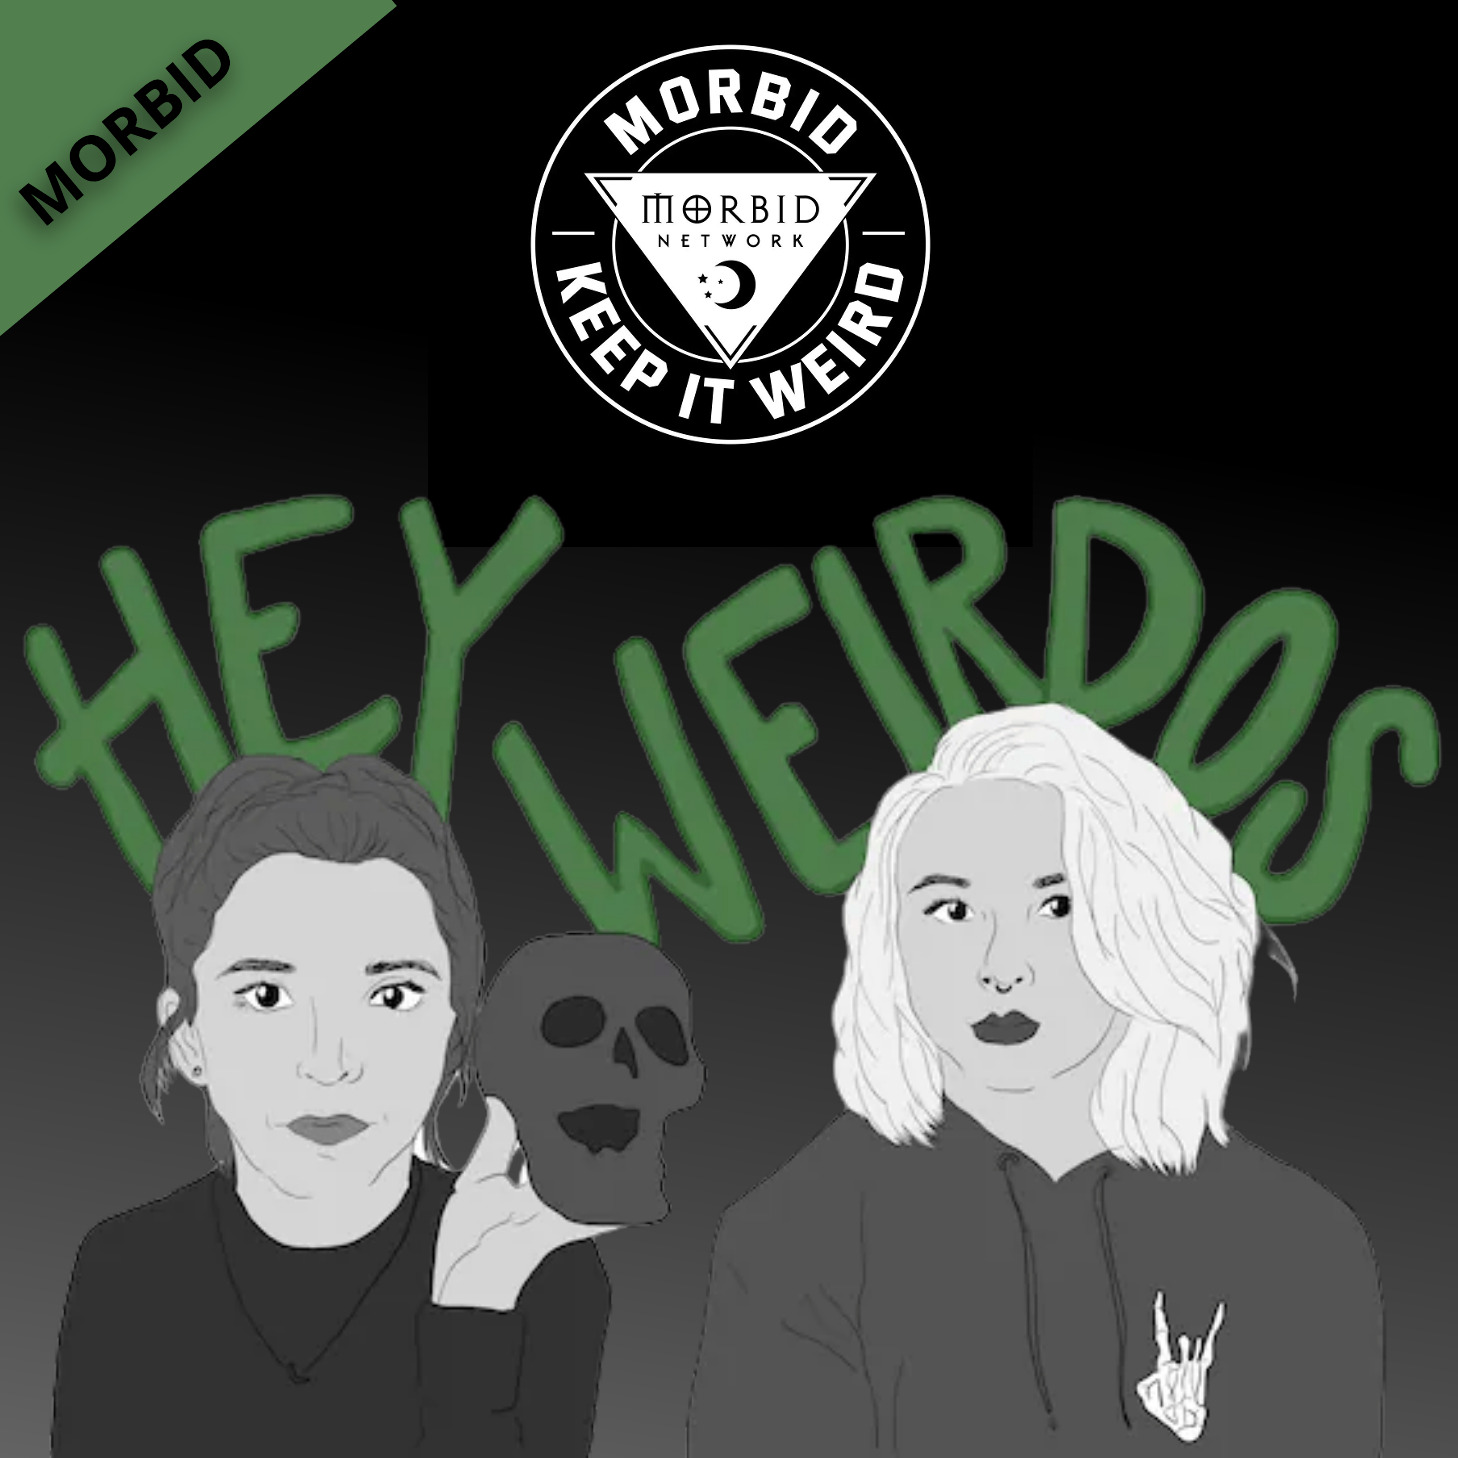 Morbid Podcast Listen Here & Full Review Podcast Tonight